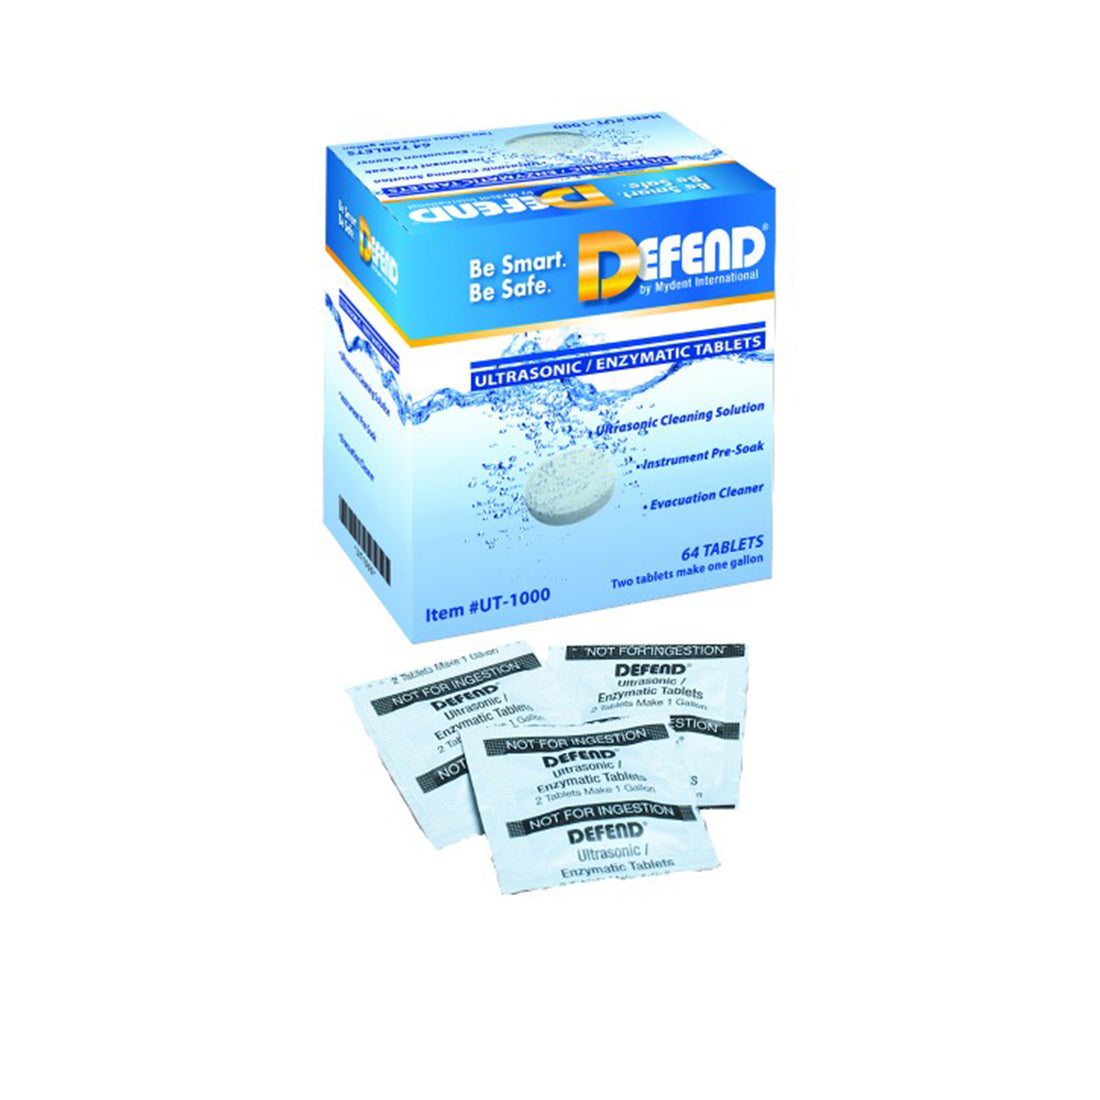 Ultrasonic/ Enzymatic Tablets